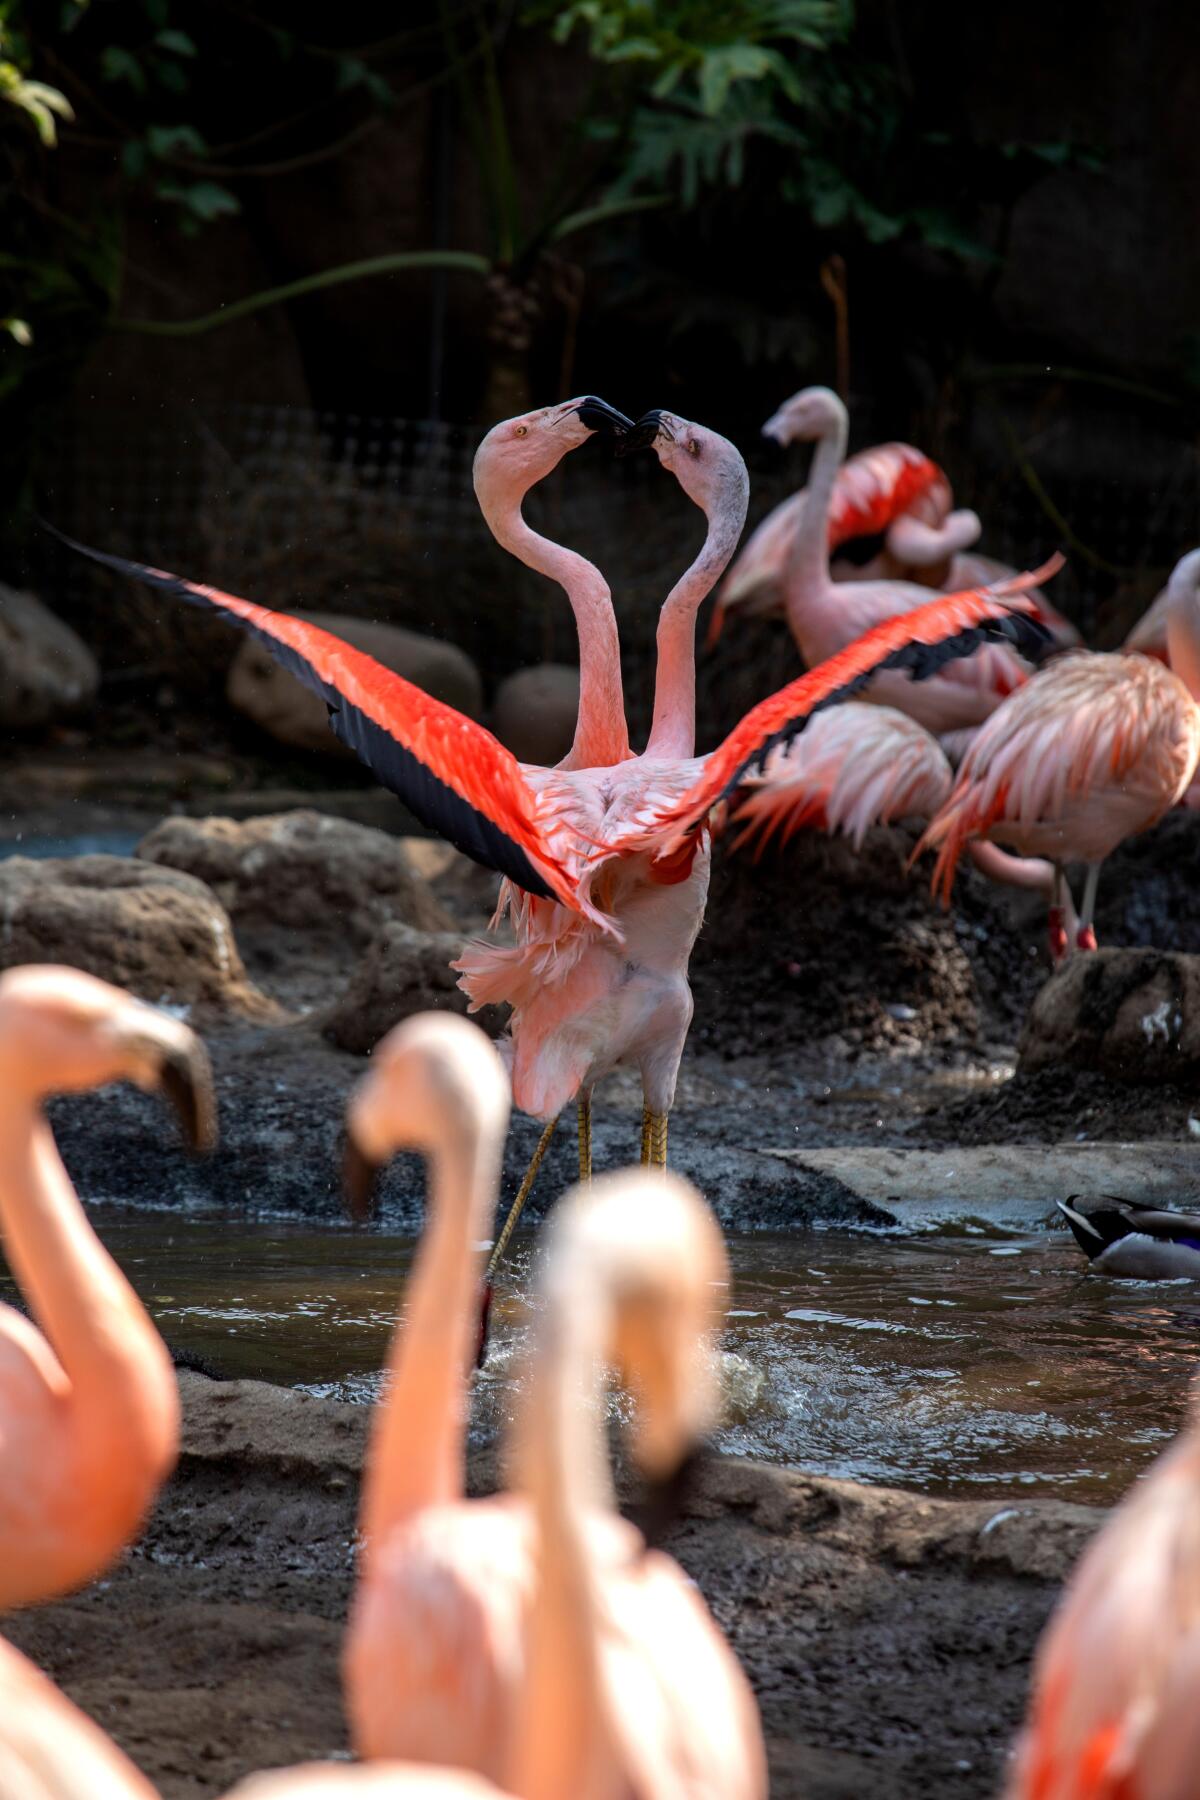 The flamingo exhibit at Santa Barbara Zoo.